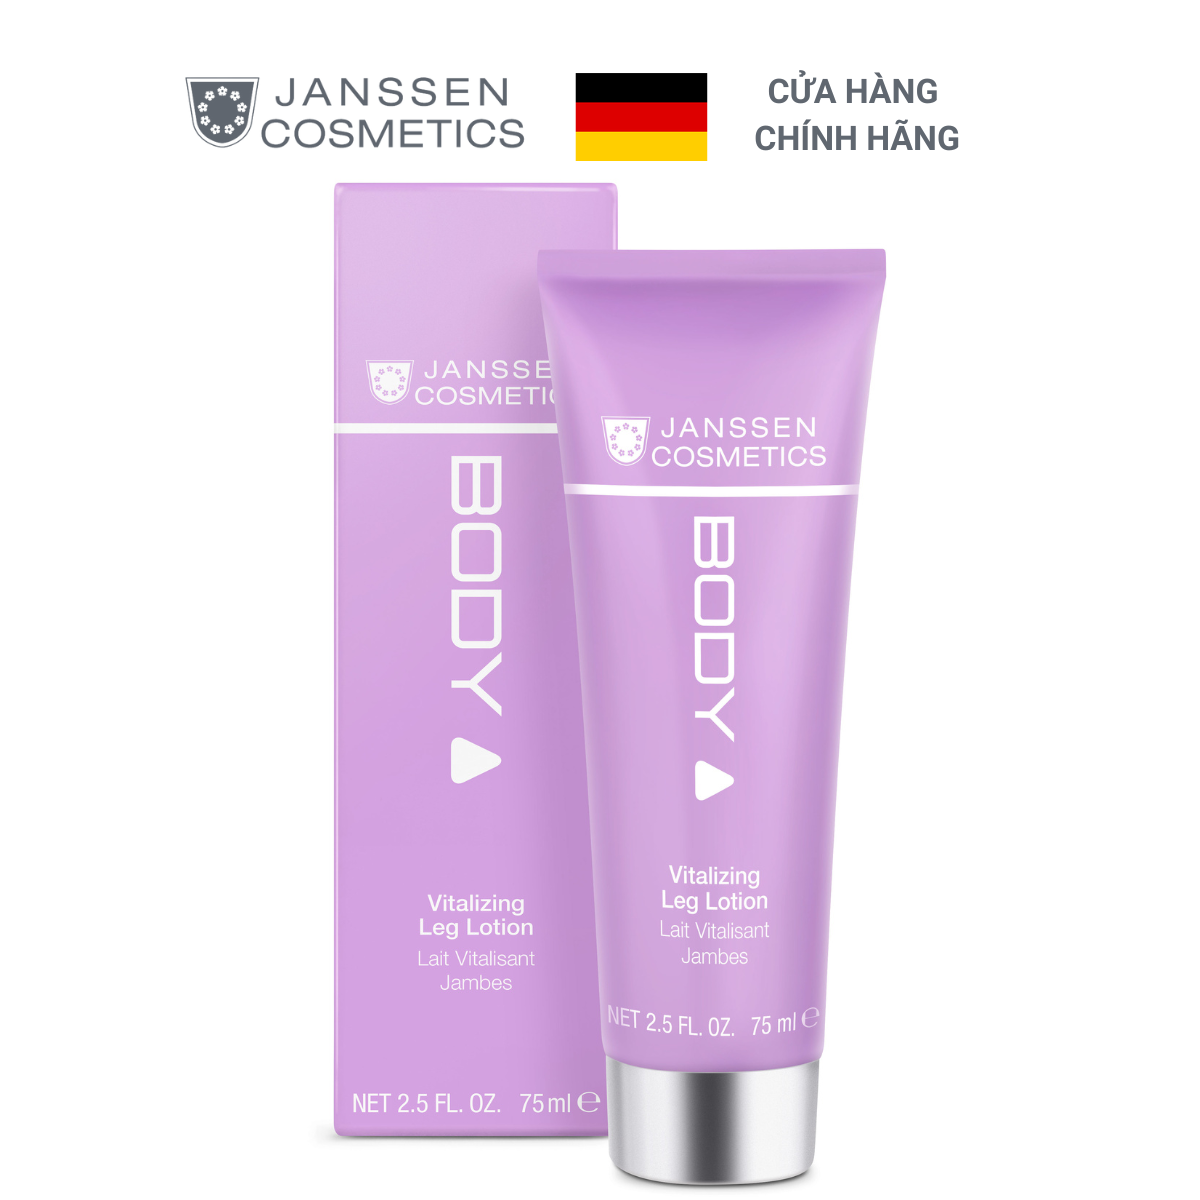  Kem dưỡng da chân Janssen Cosmetics Vitalizing Leg Lotion 75ml 